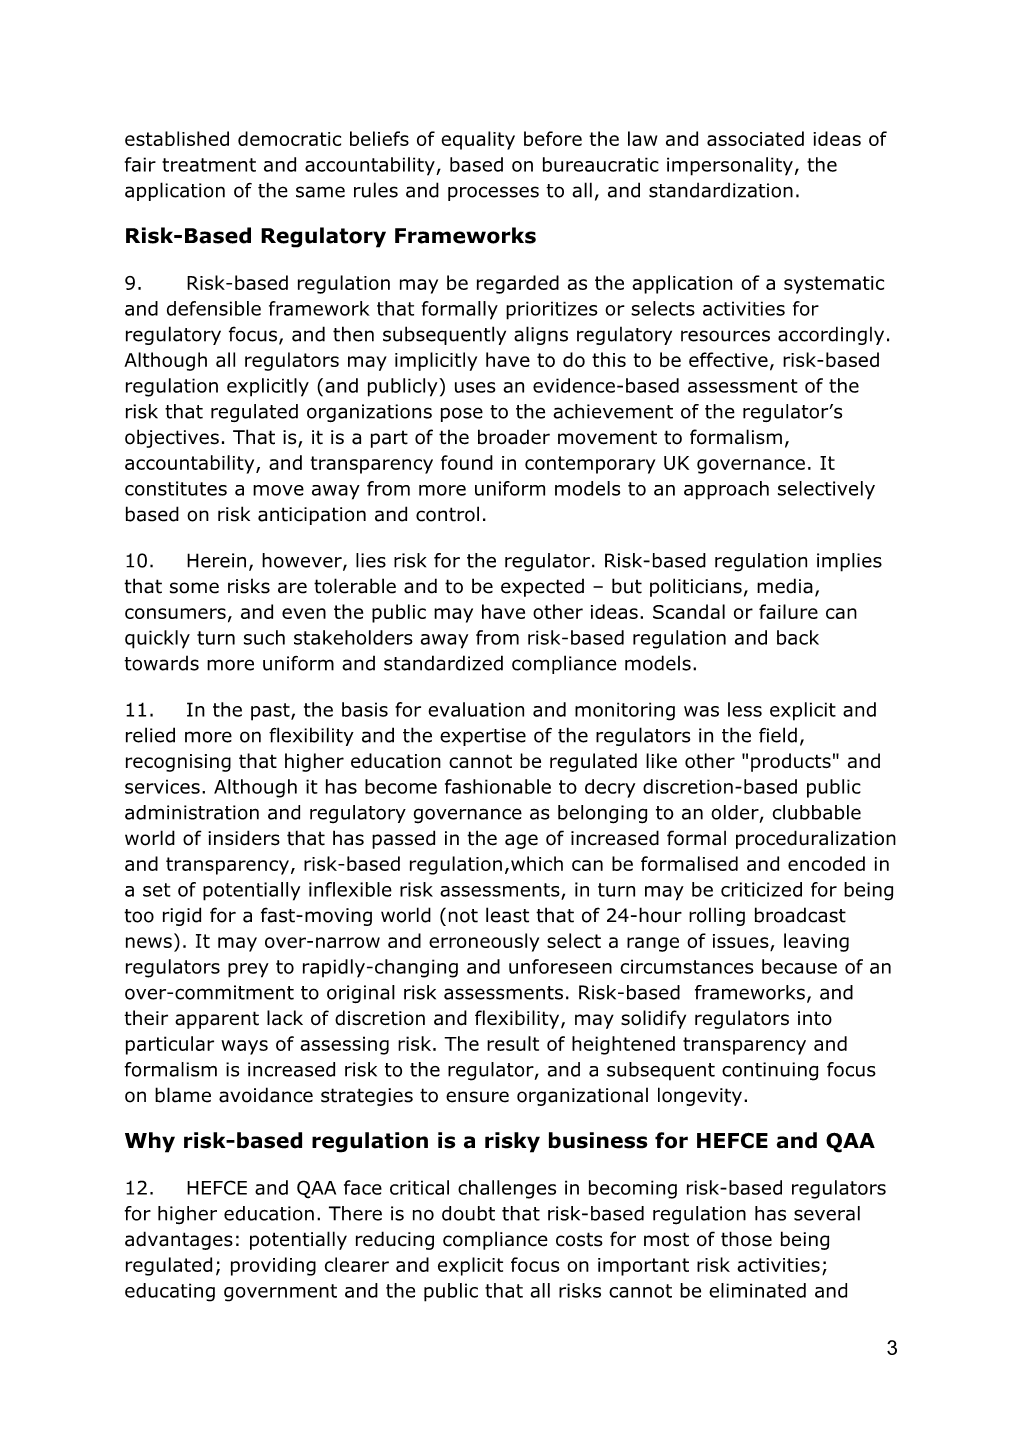 The Risks of Risk-Based Regulation: the Regulatory Challenges of the Higher Education